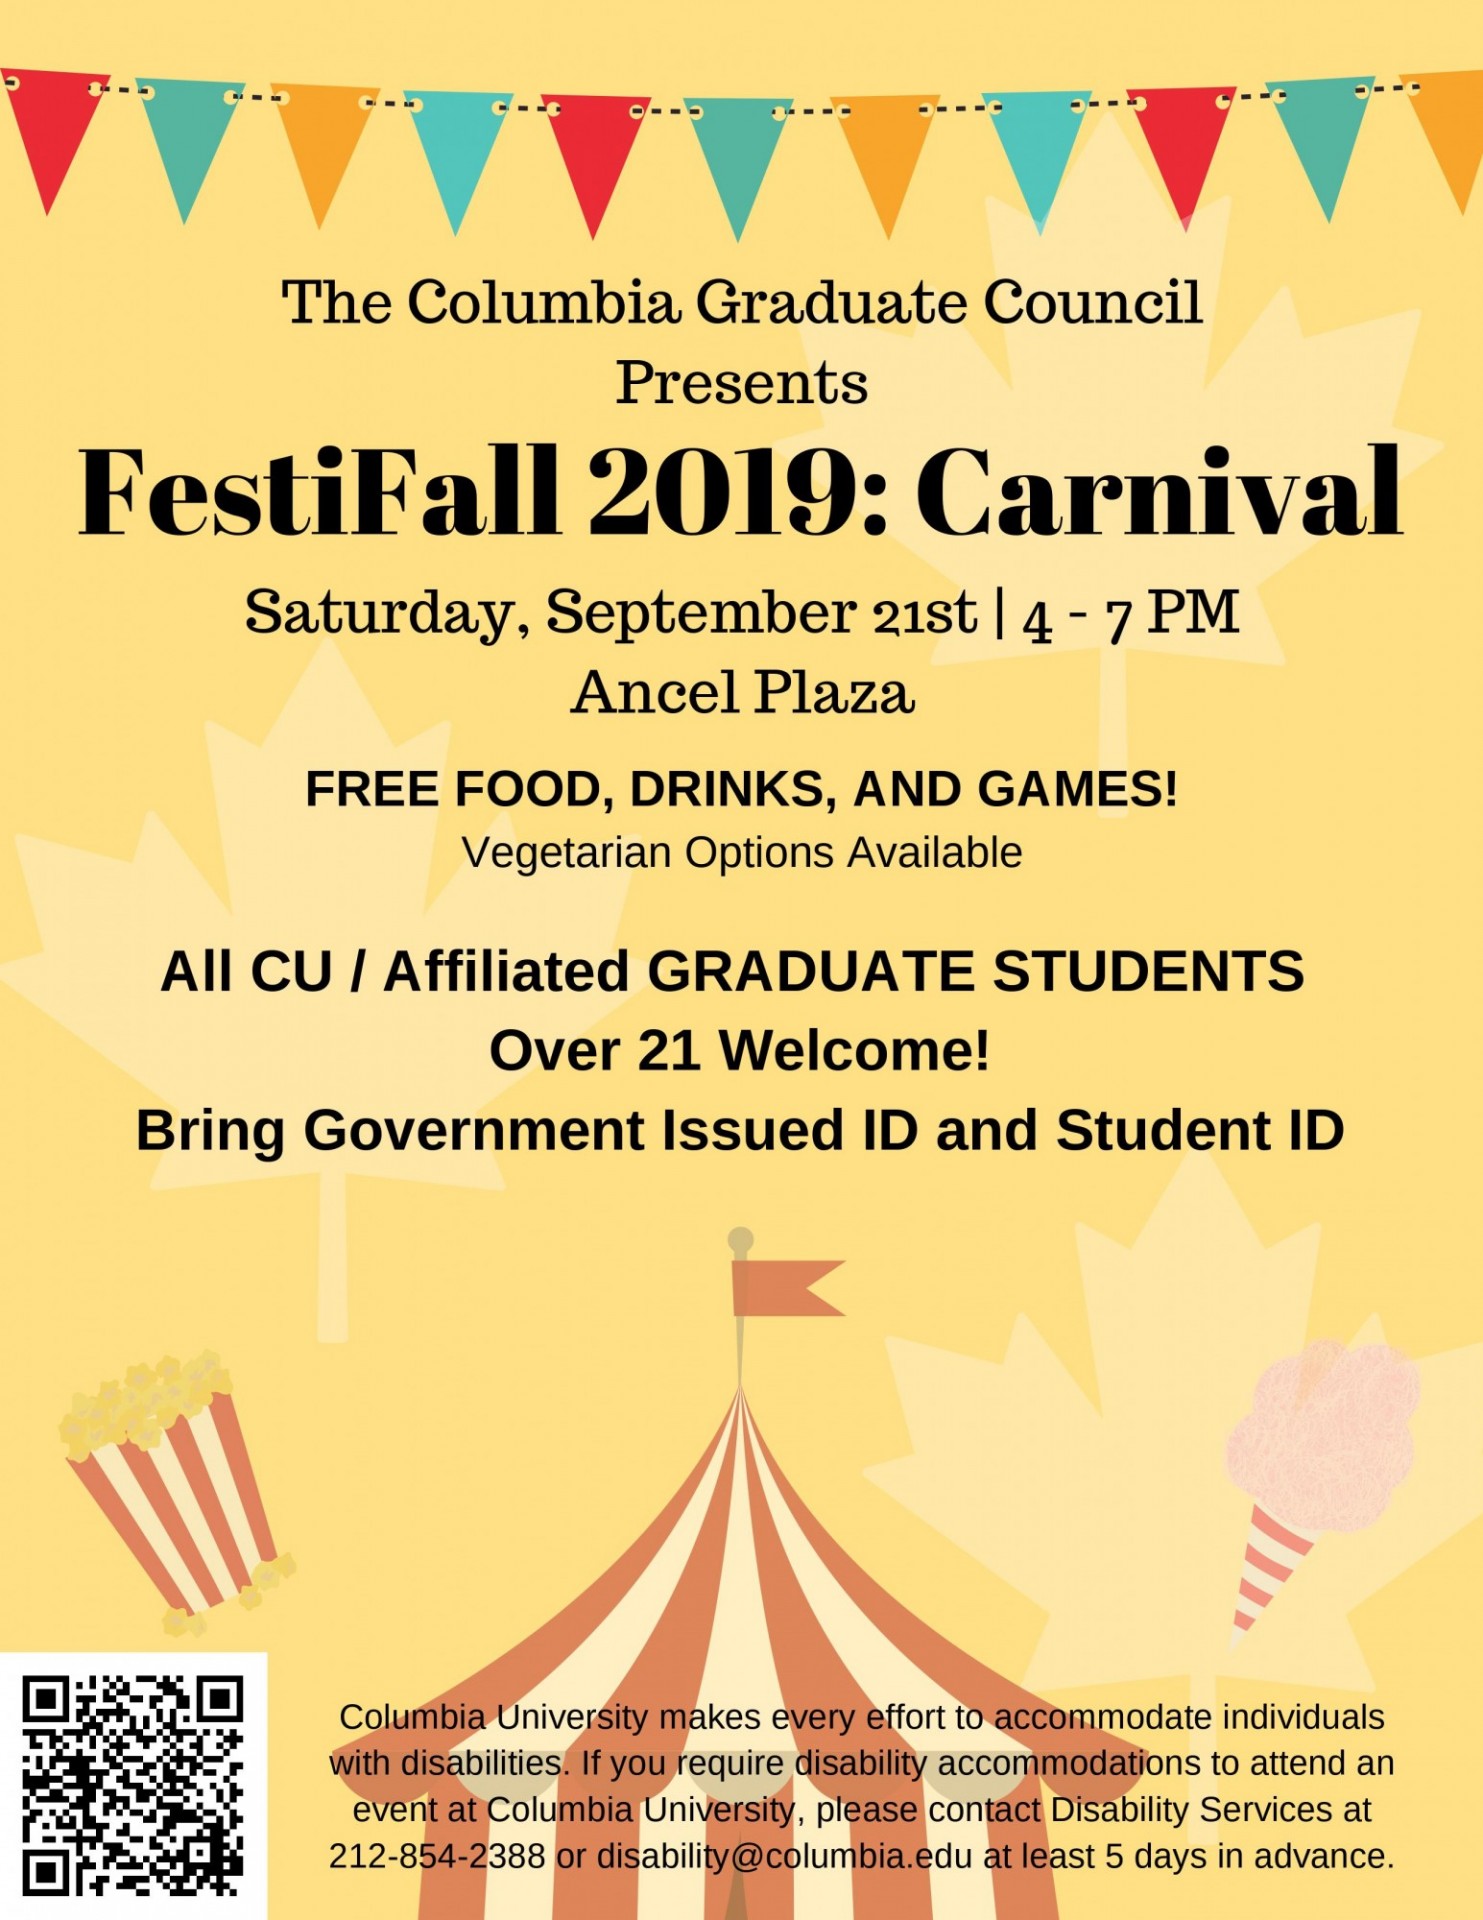 FestiFall 2019: Carnival